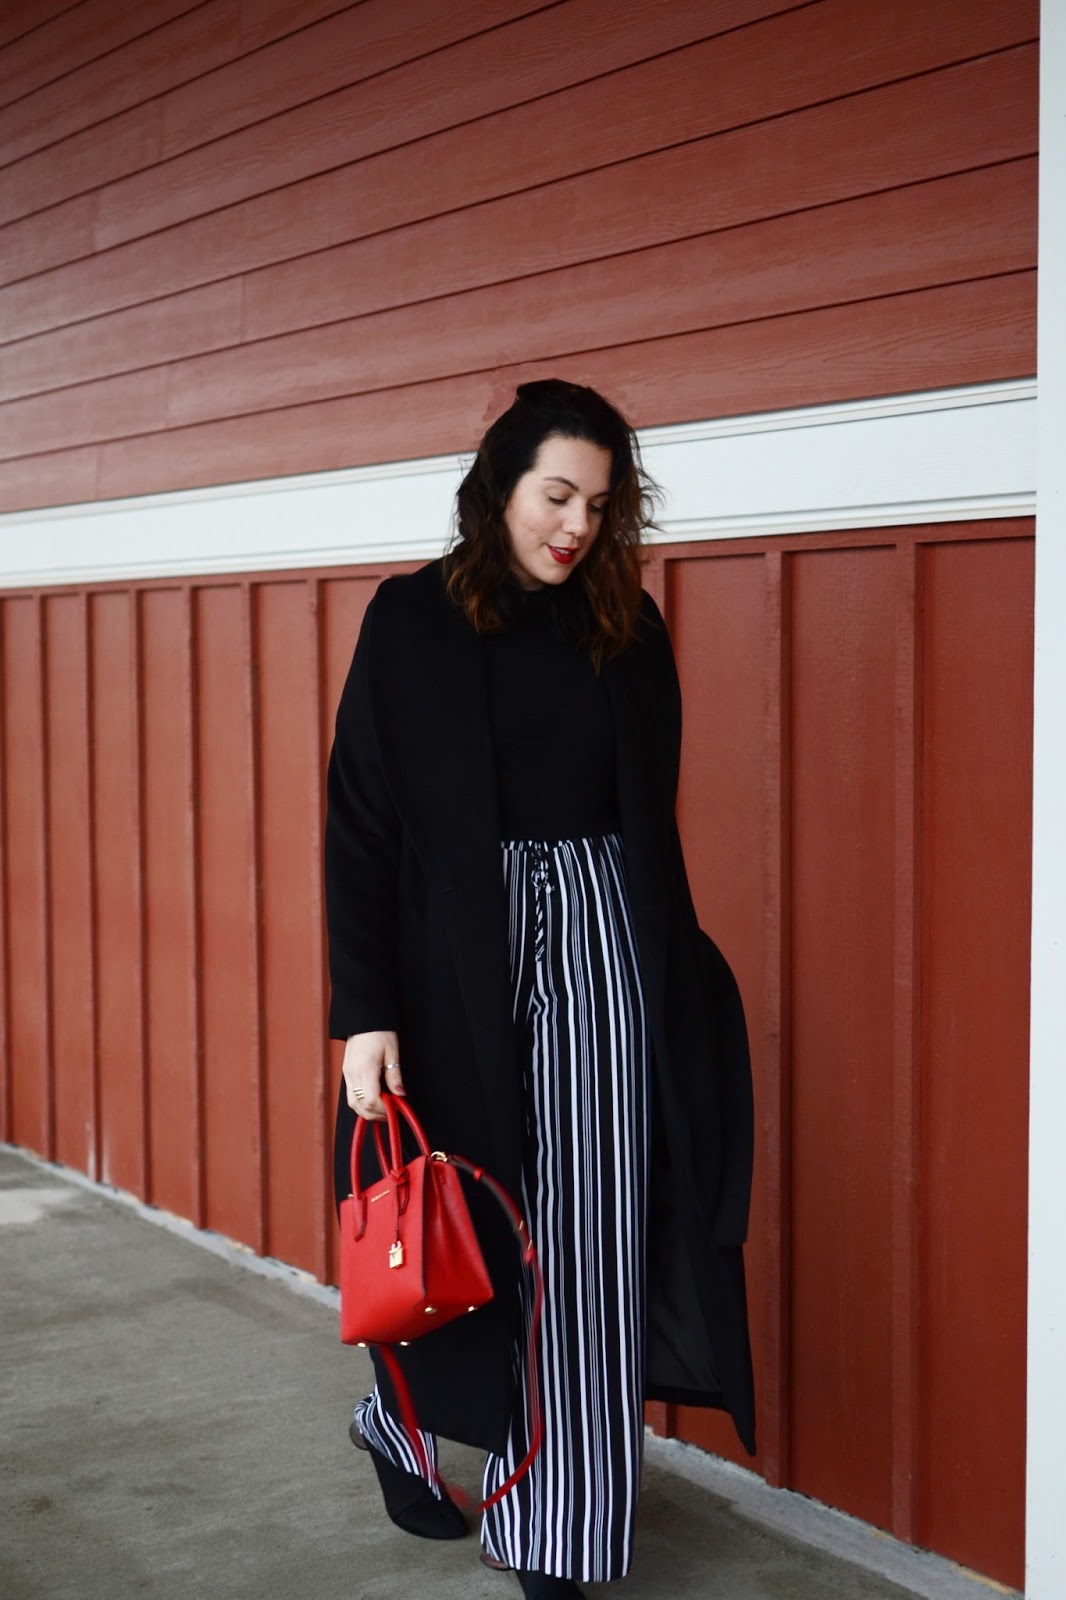 Le Chateau striped pants trousers outfit vancouver fashion blogger aleesha harris